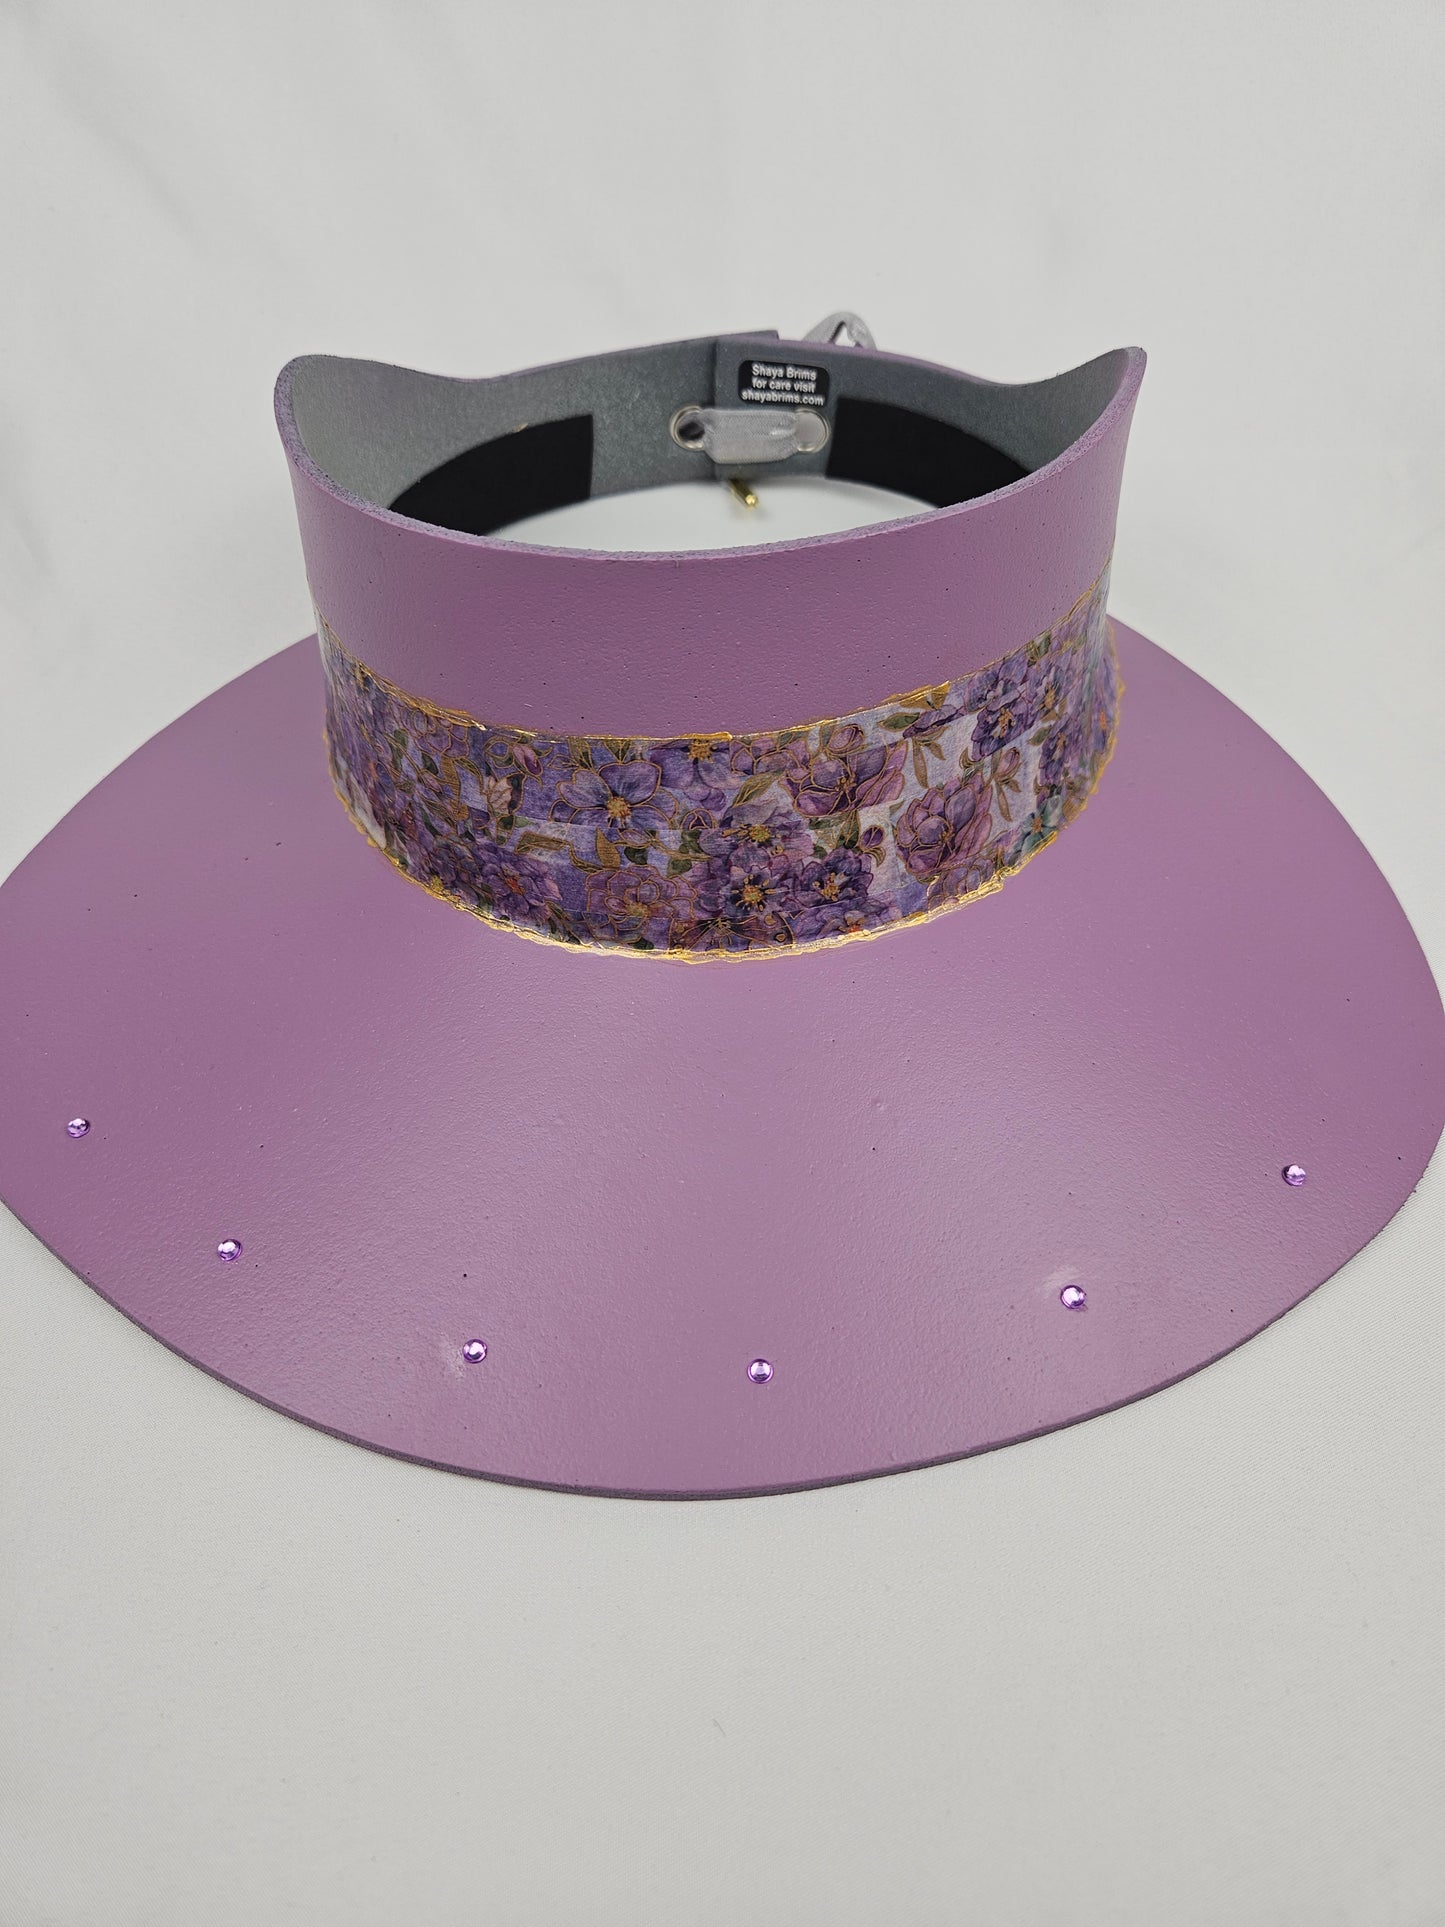 Tall Trending Purple Audrey Sun Visor Hat with Purple Floral Band and Rhinestone Border: 1950s, Walks, Brunch, Asian, Golf, Easter, Church, No Headache, Derby